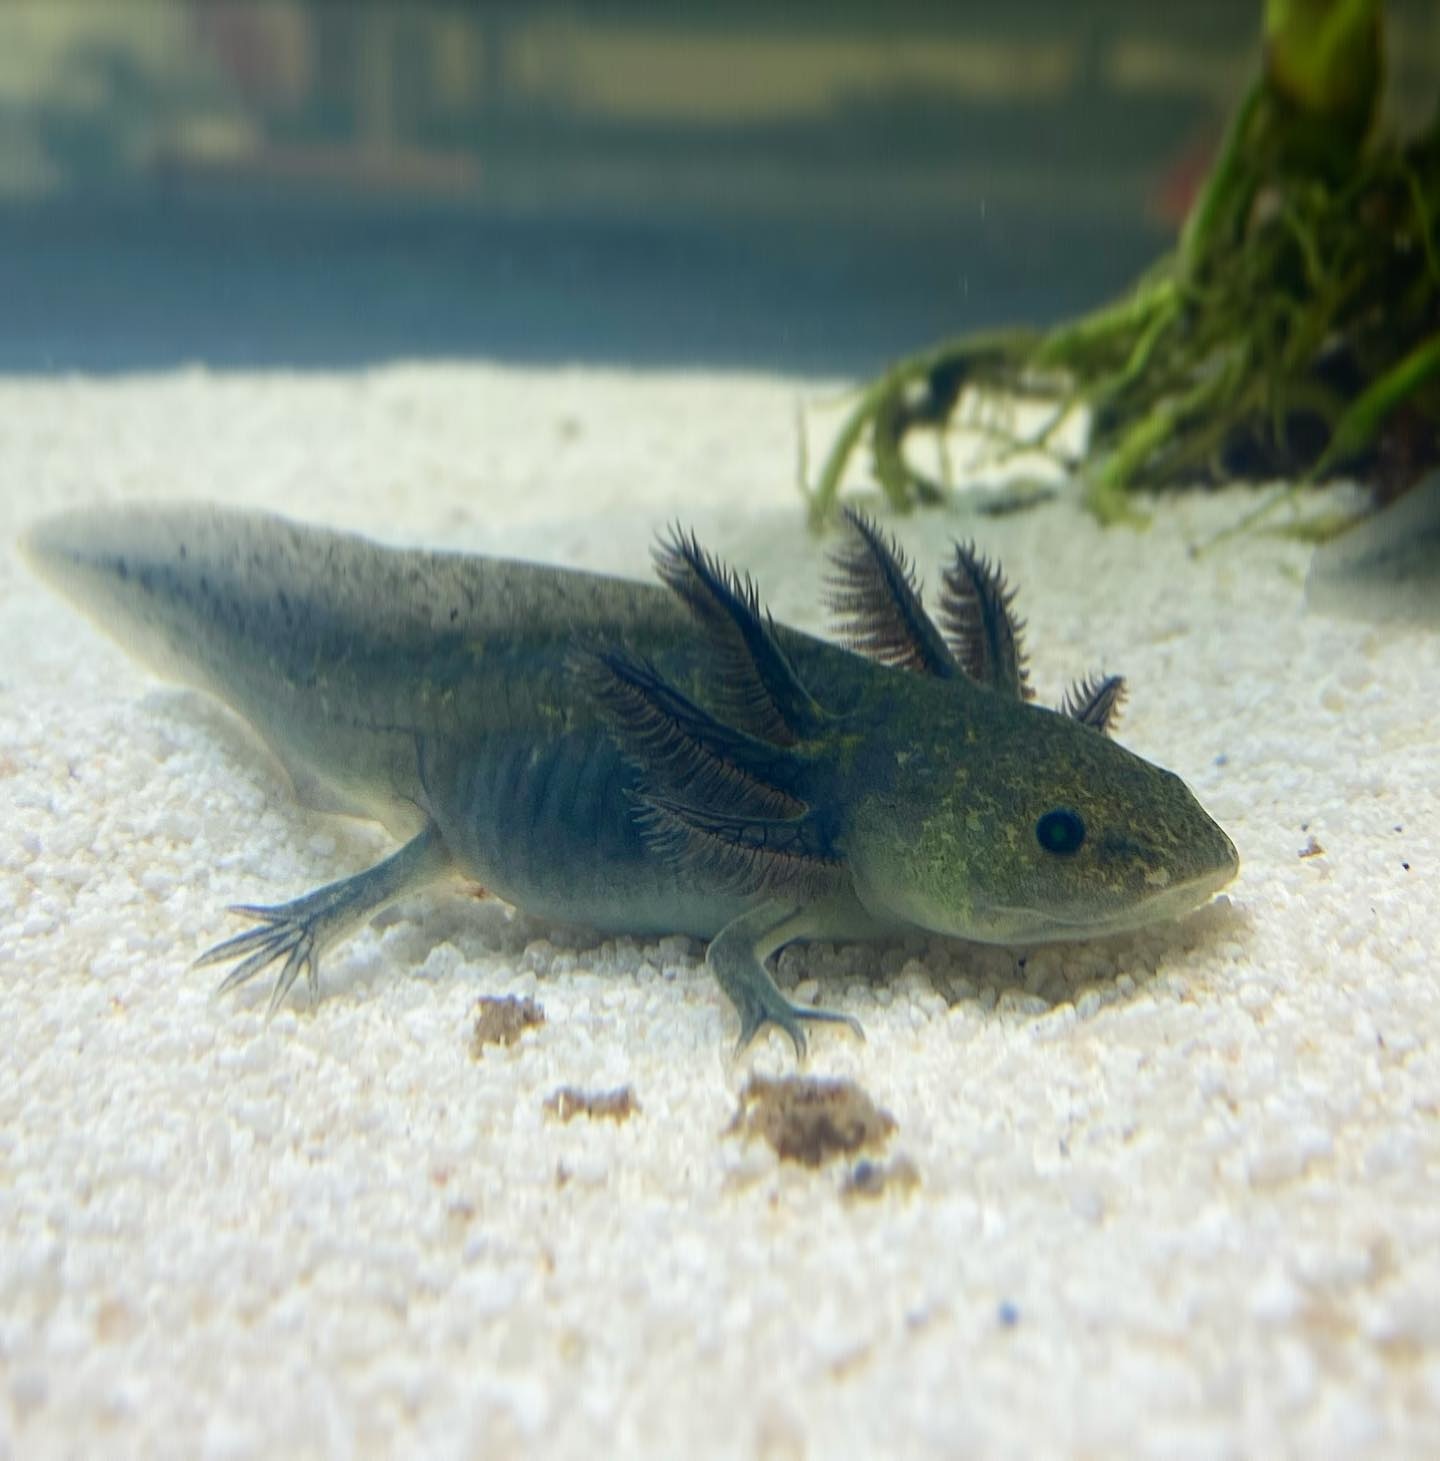 Sub-Adult Melanoid GFP Axolotl by Xochi Exotics